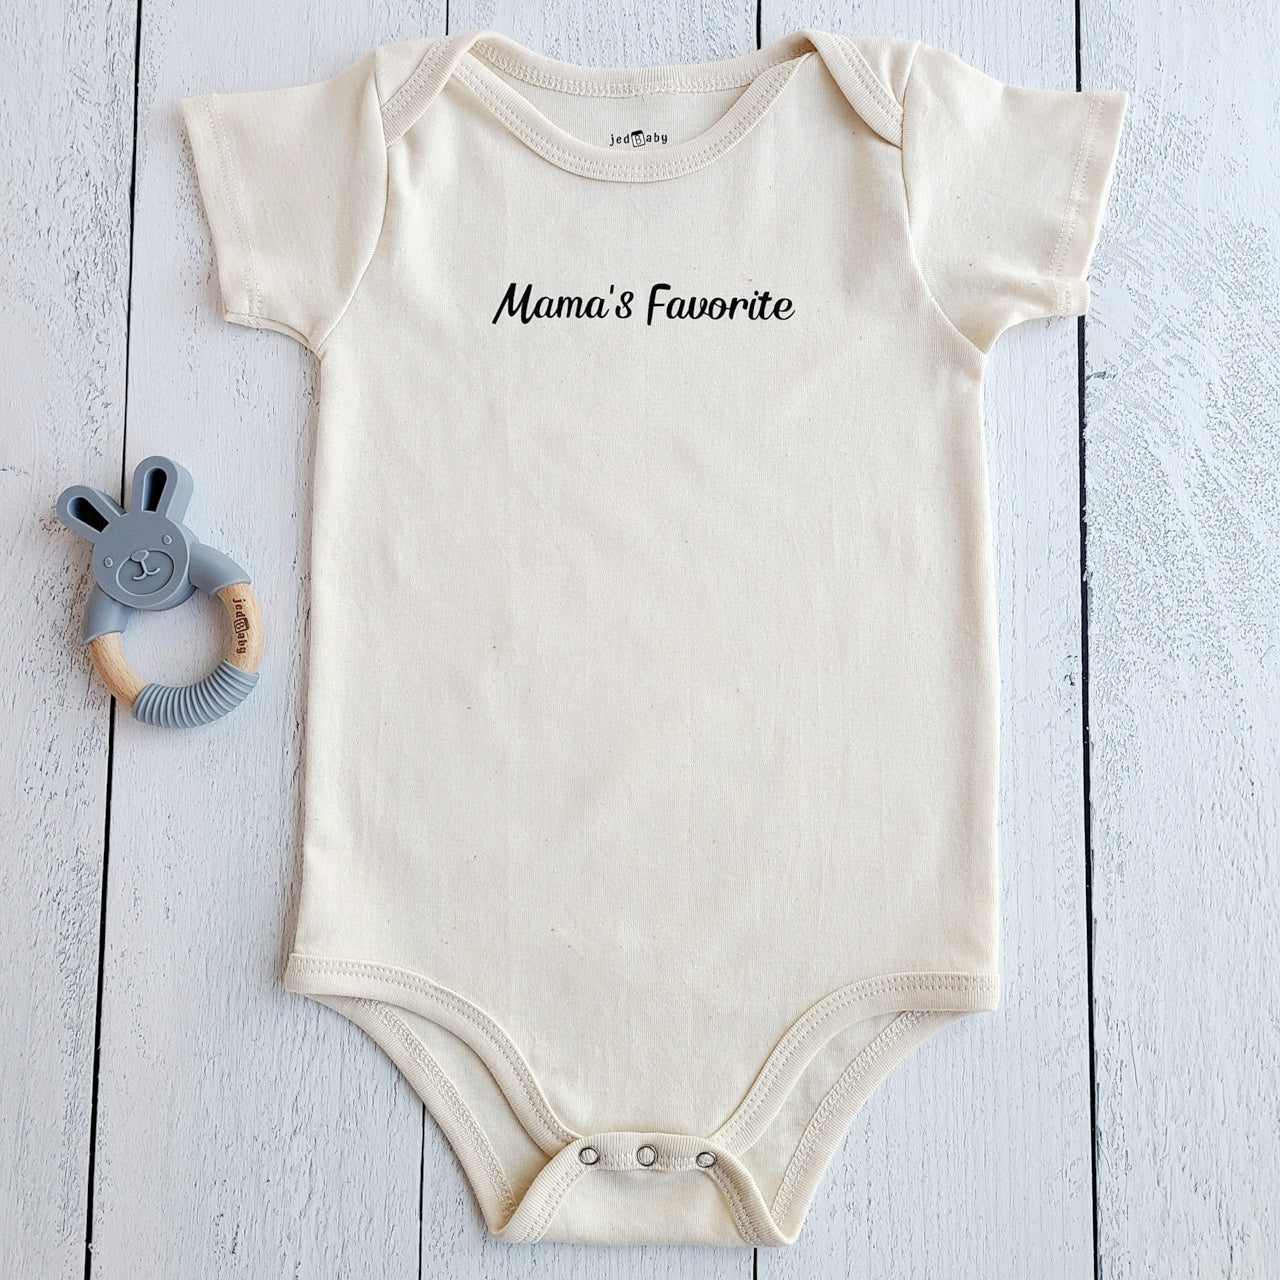 Jedbaby Mama's Favorite Short Sleeve Baby Onesie Bodysuit